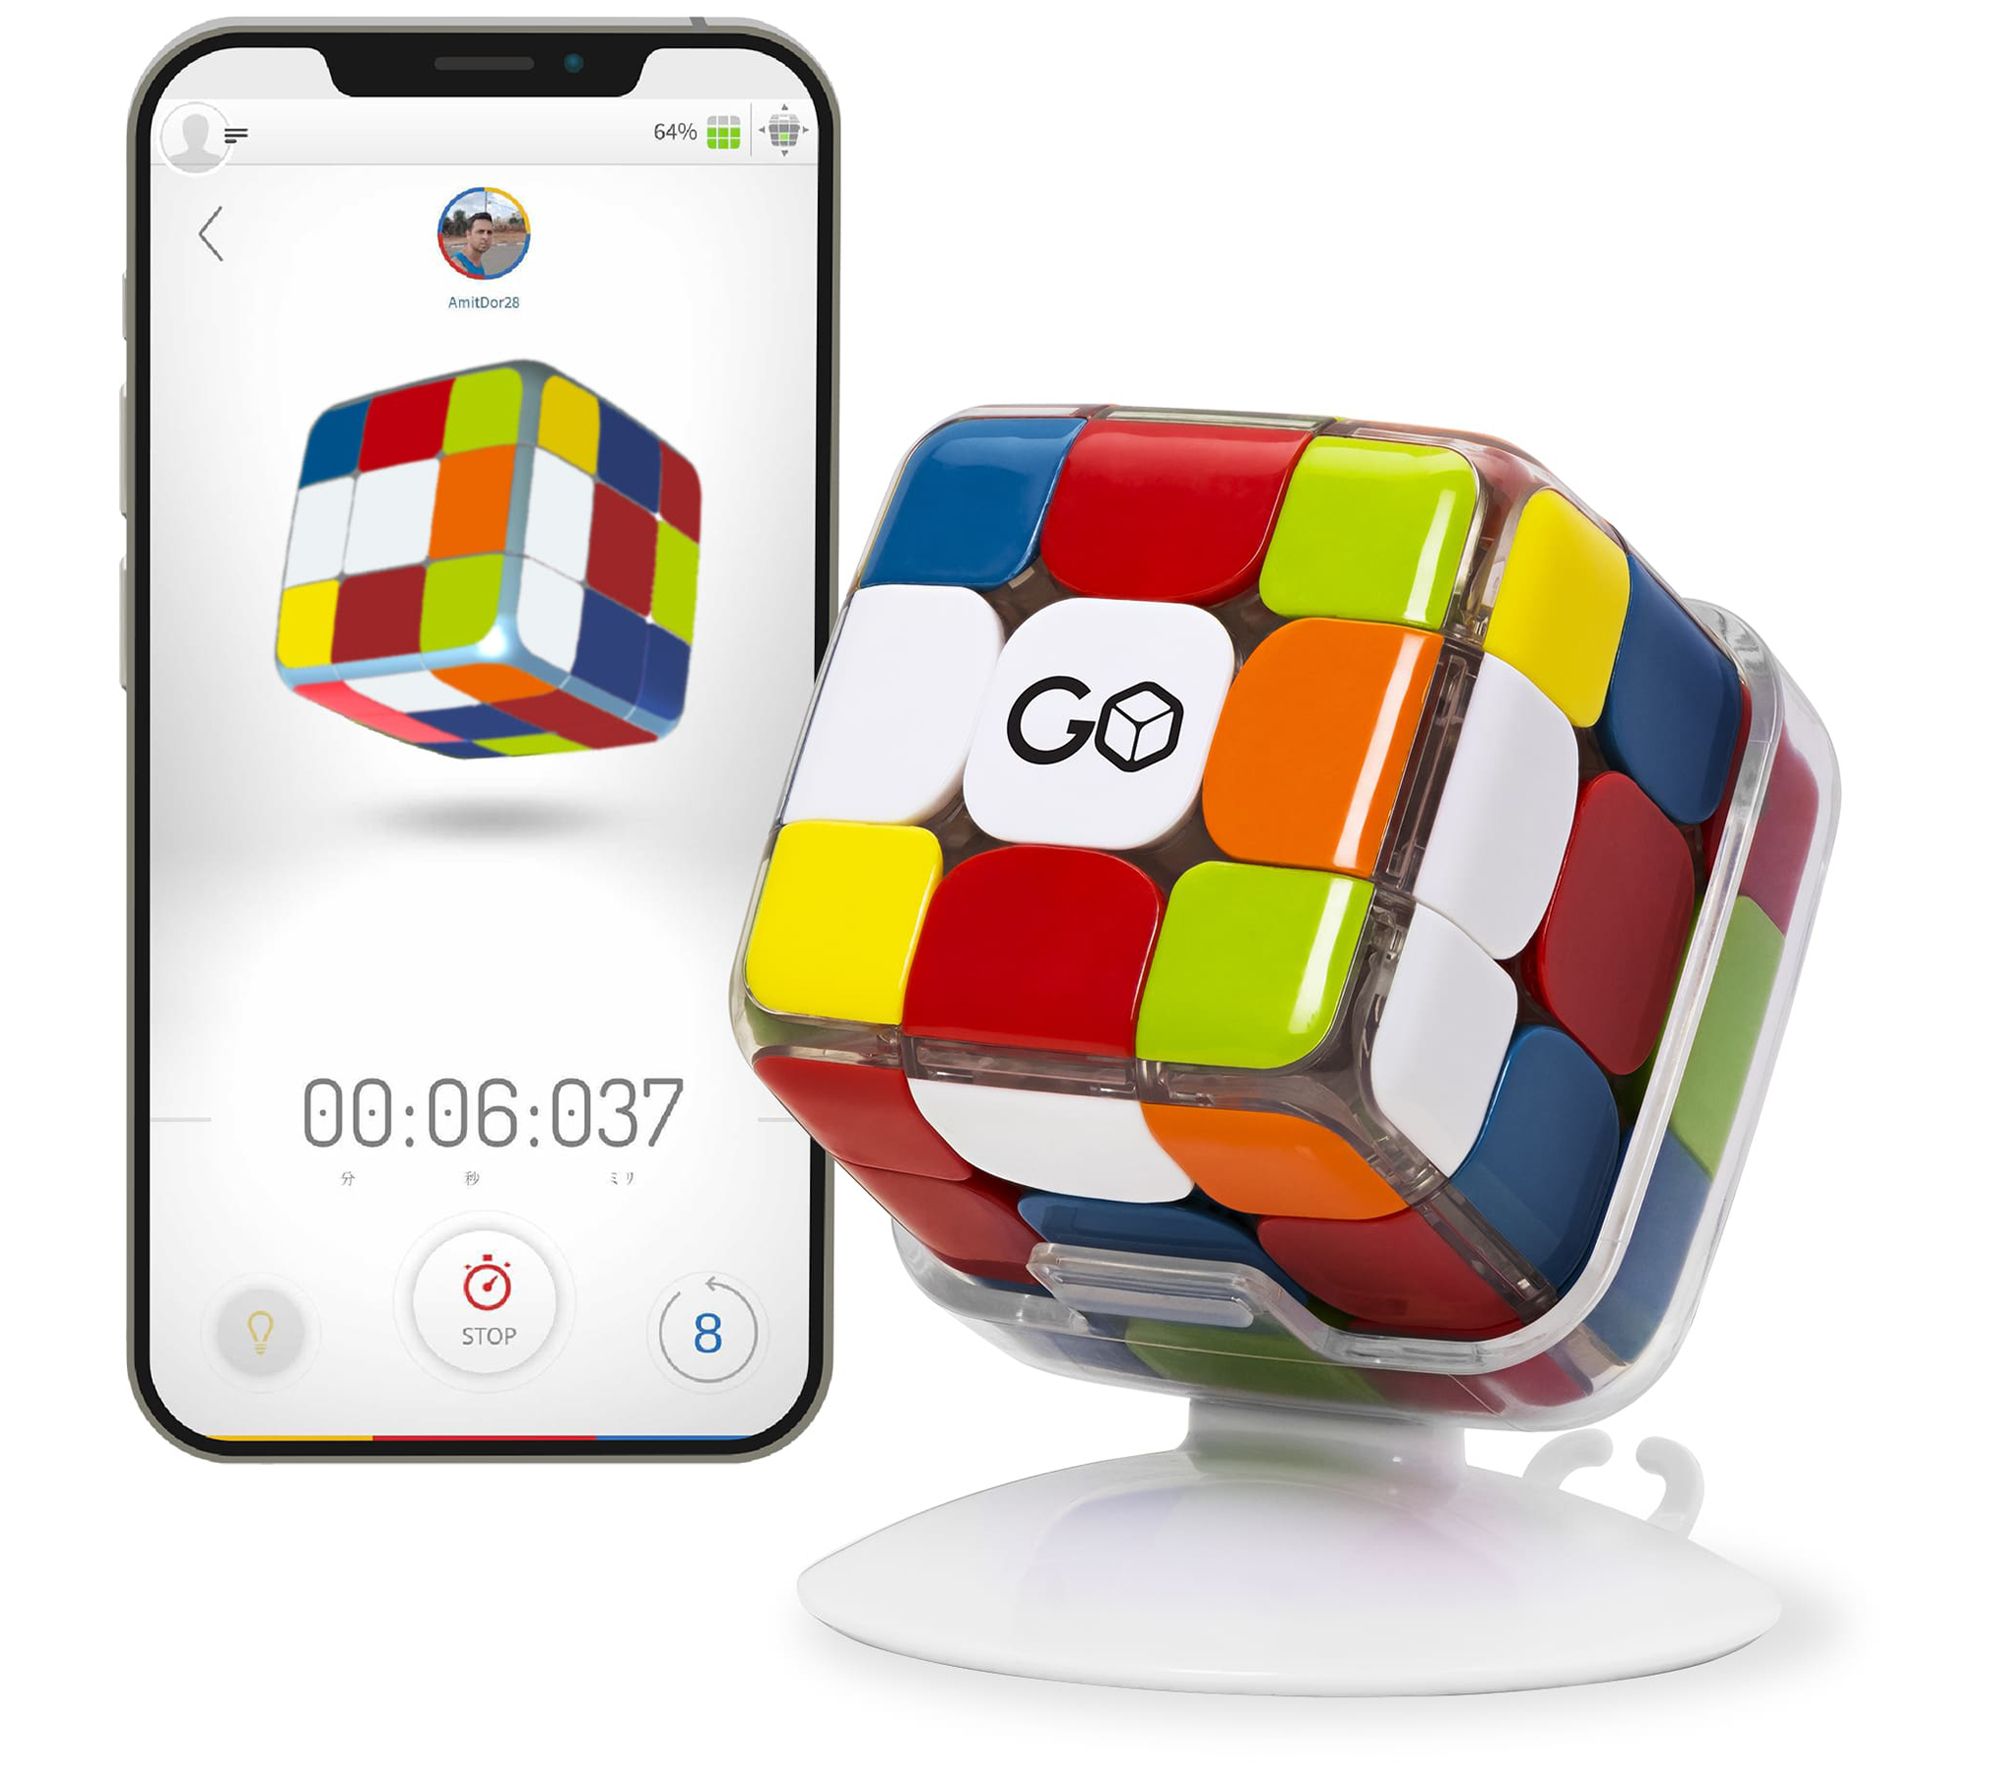 1 Hour Timer - Countdown  Countdown, Timer, Rubiks cube